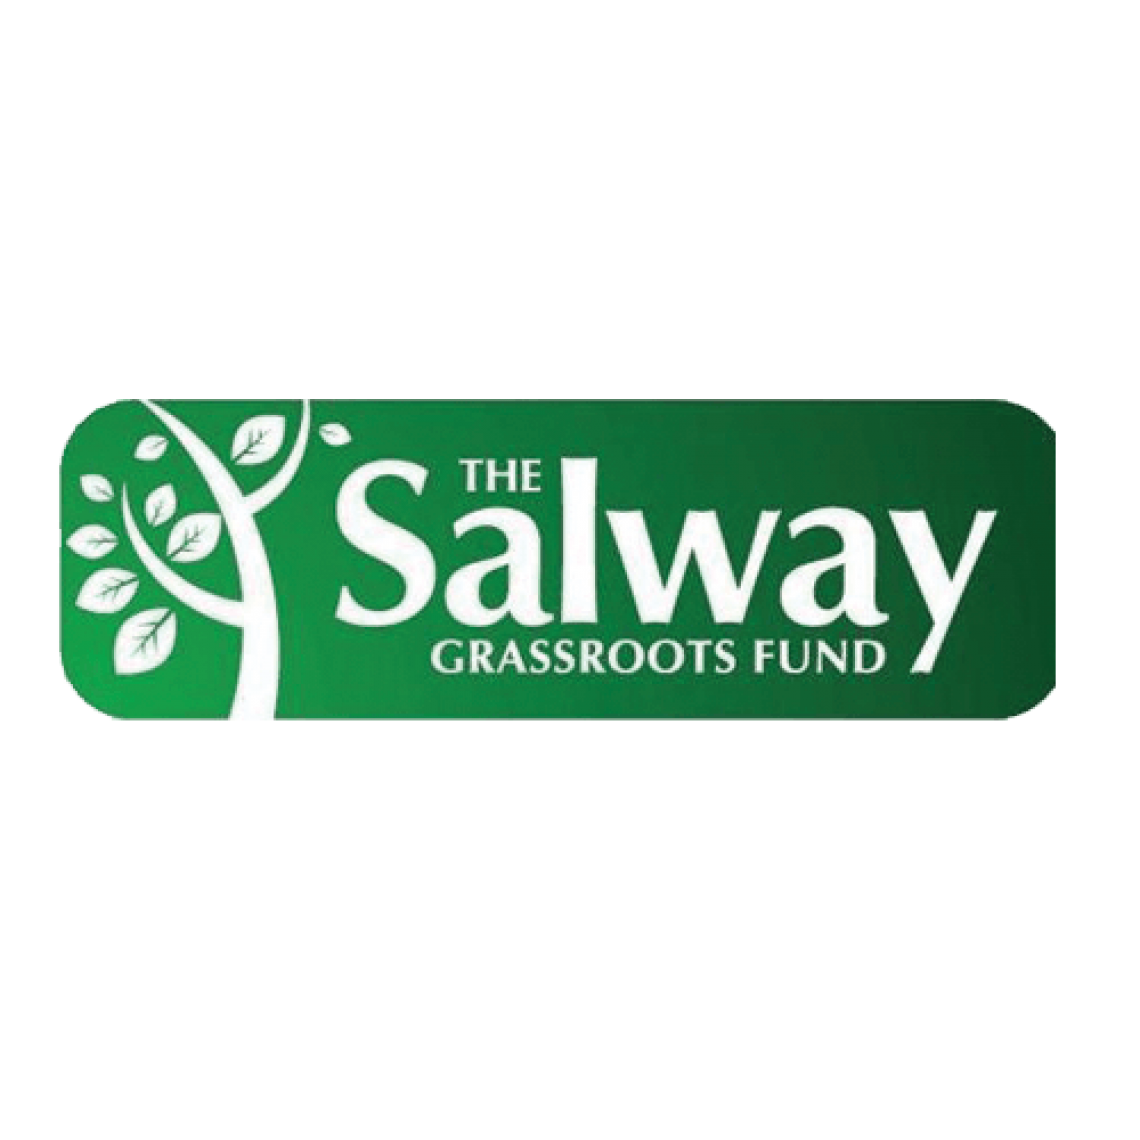 The Salway Grassroots Fund logo